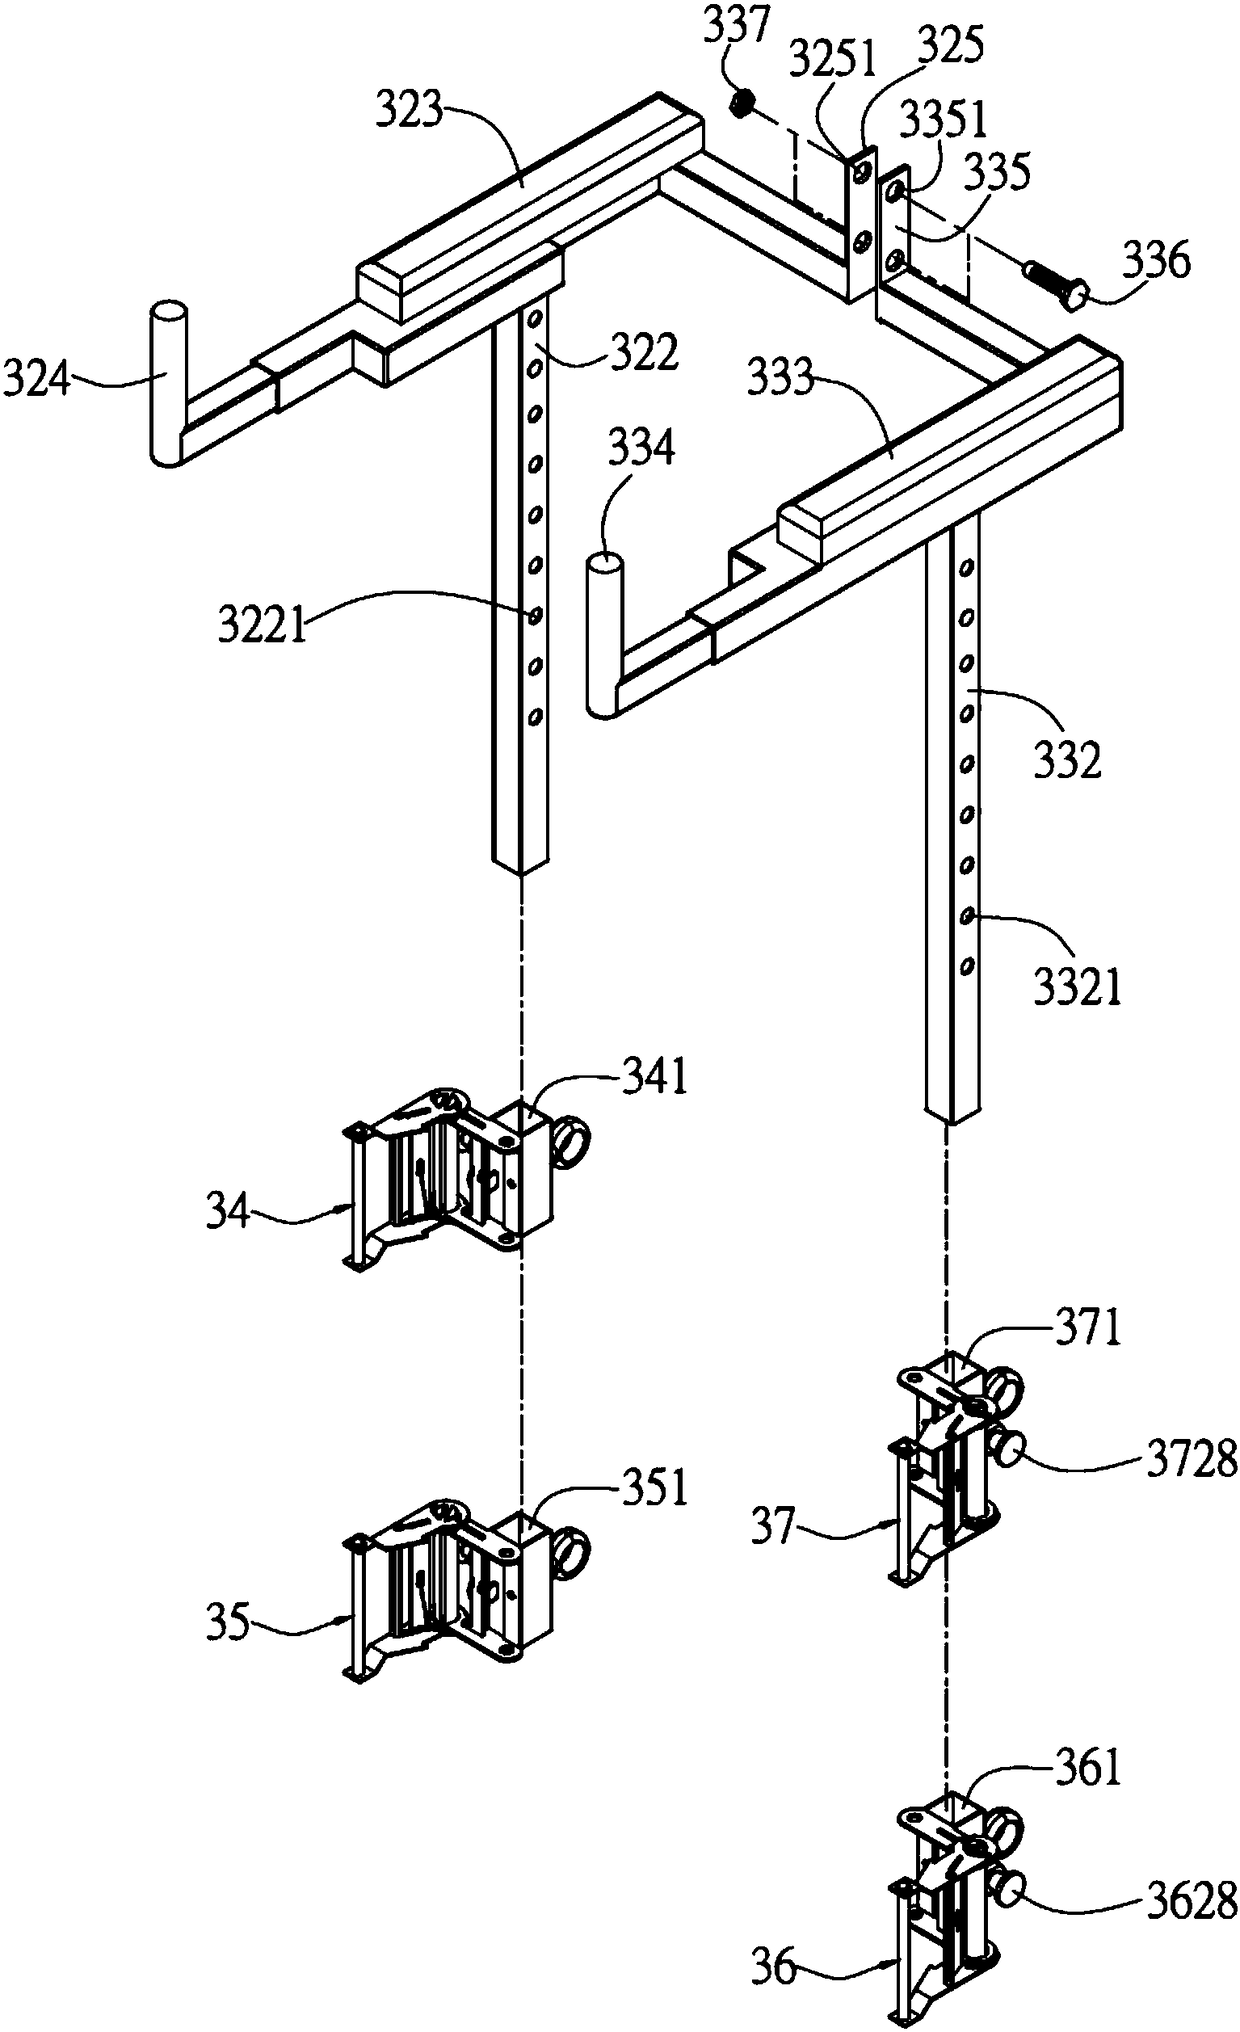 Vertebral column horizontal melodic movement apparatus